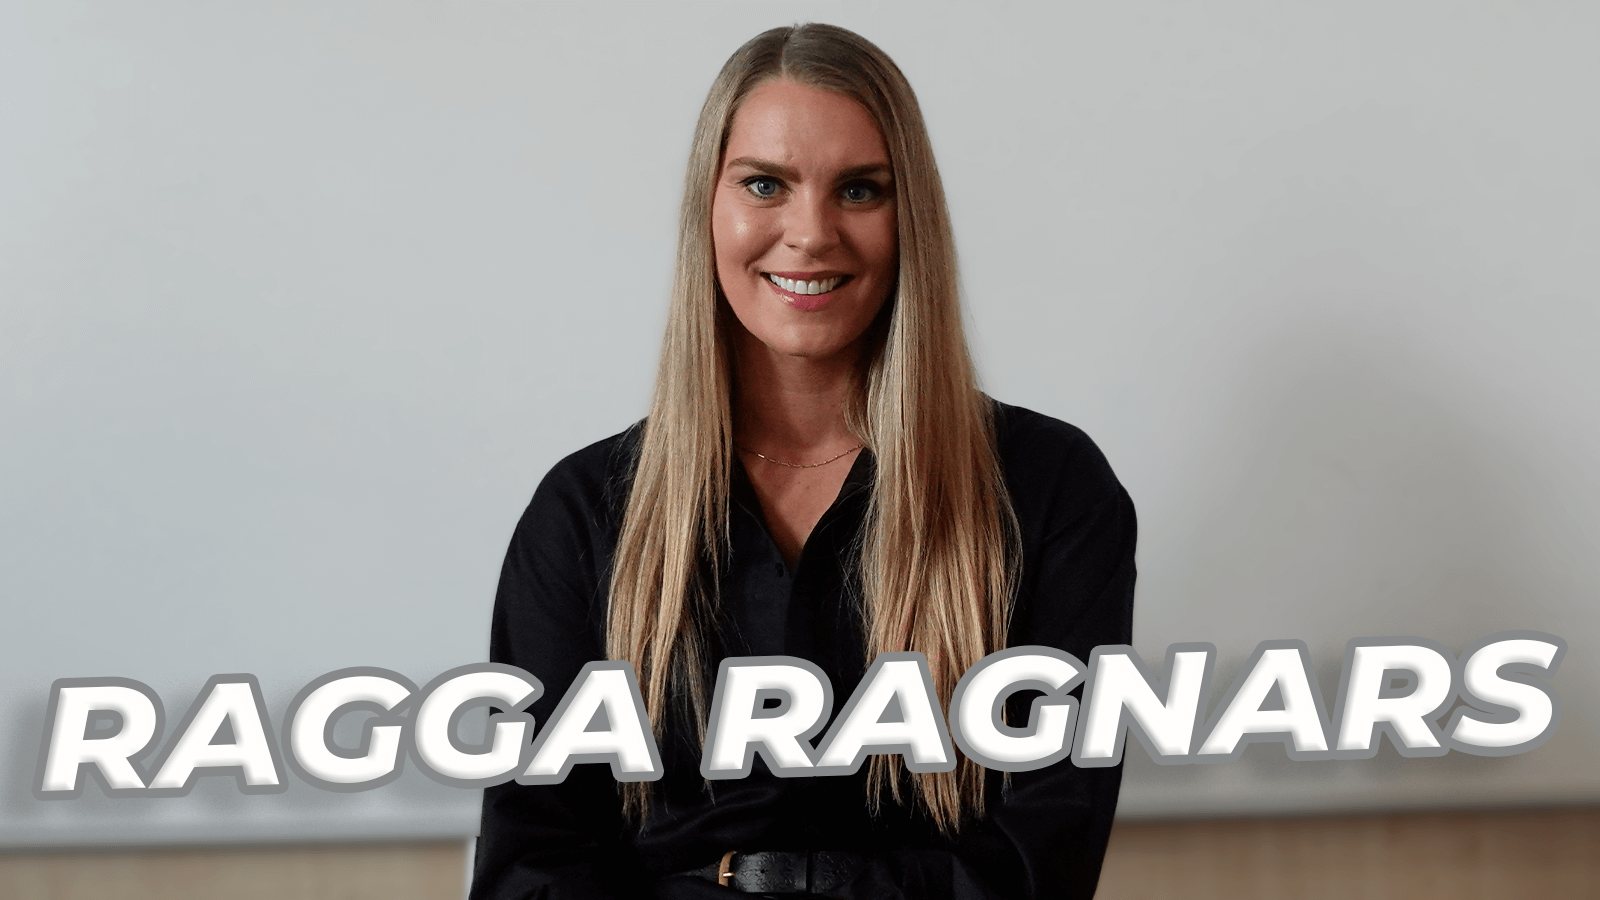 Vikings : Ragga Ragnars se confie sur son expérience